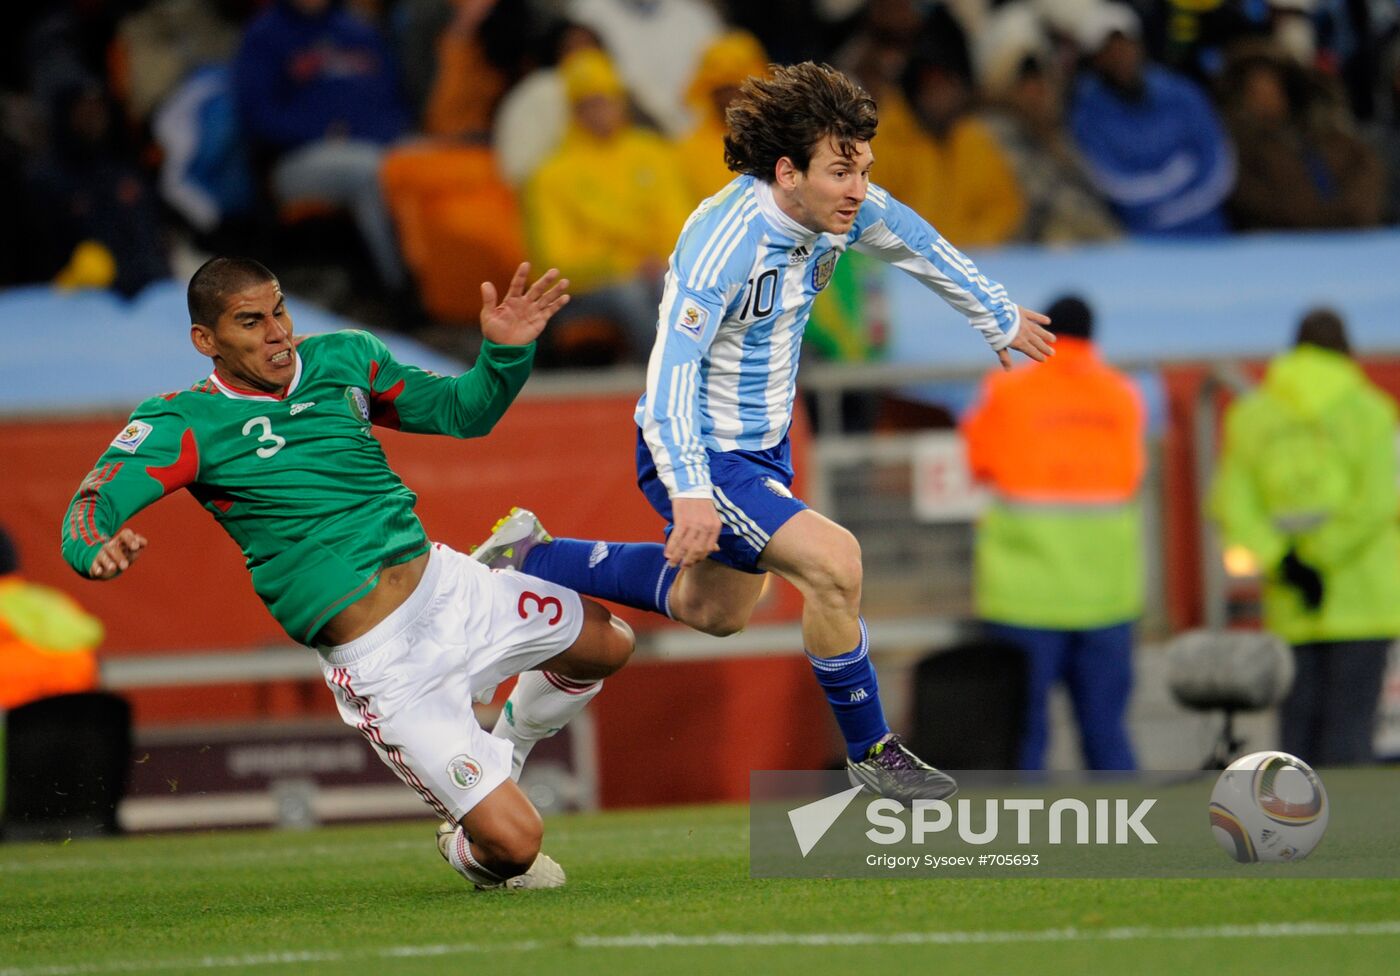 FIFA World Cup 2010. Argentina vs. Mexico